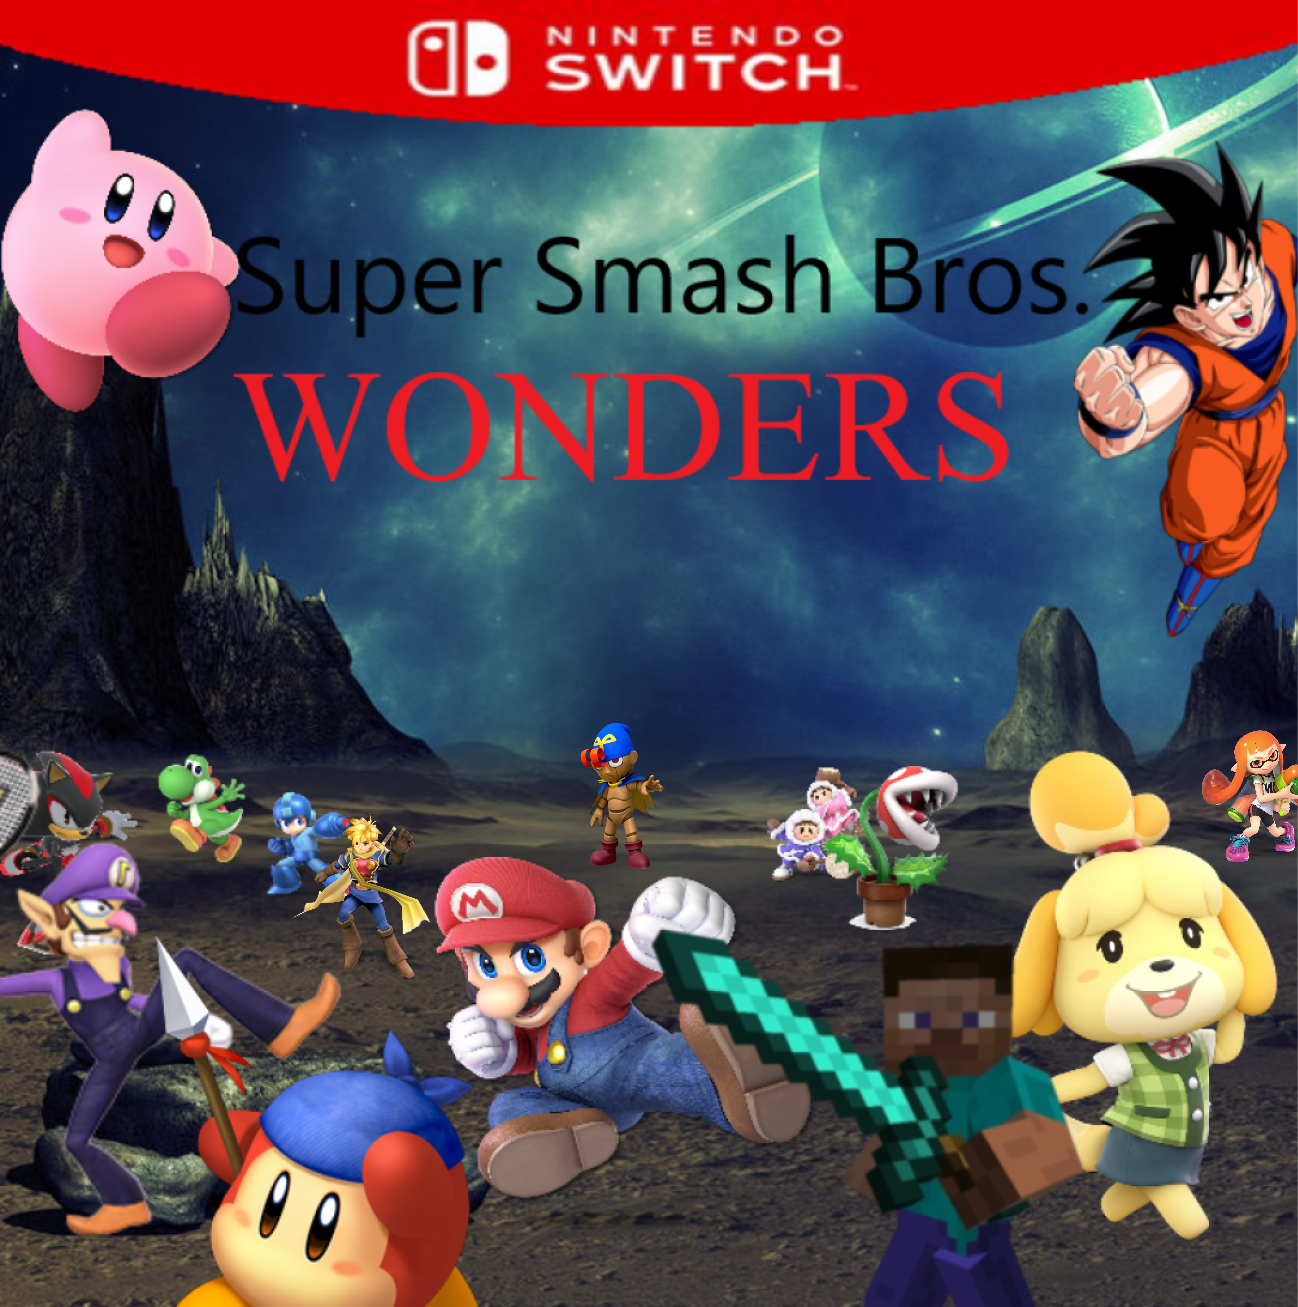 Super Smash Bros Wonders Fantendo Nintendo Fanon Wiki Fandom Powered By Wikia 1713